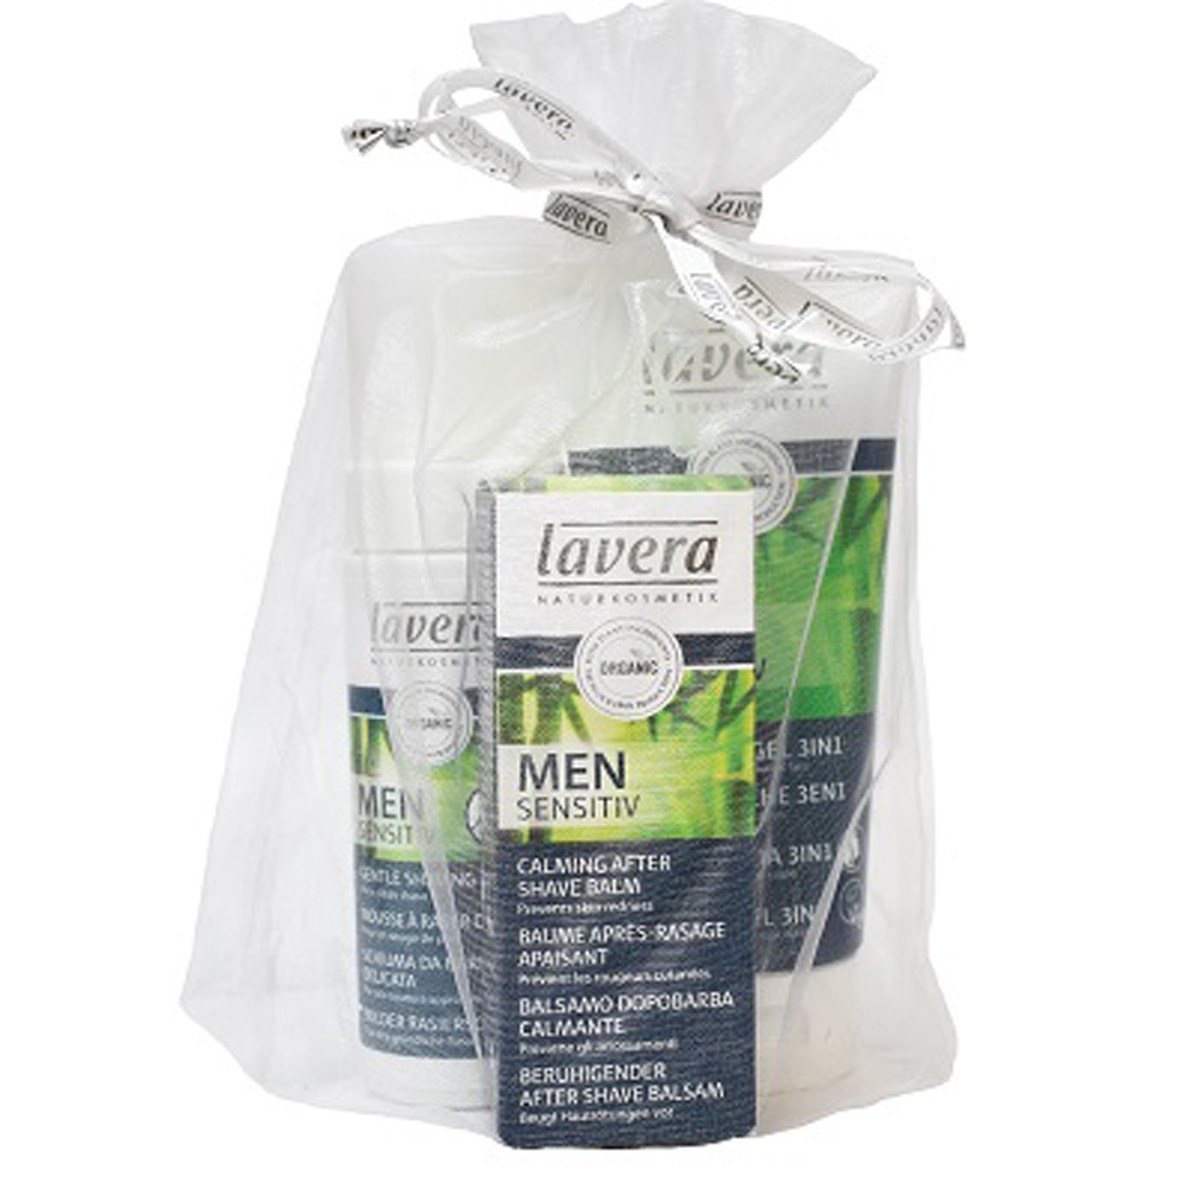 Lavera Men Cleanse & Shave Gift Set